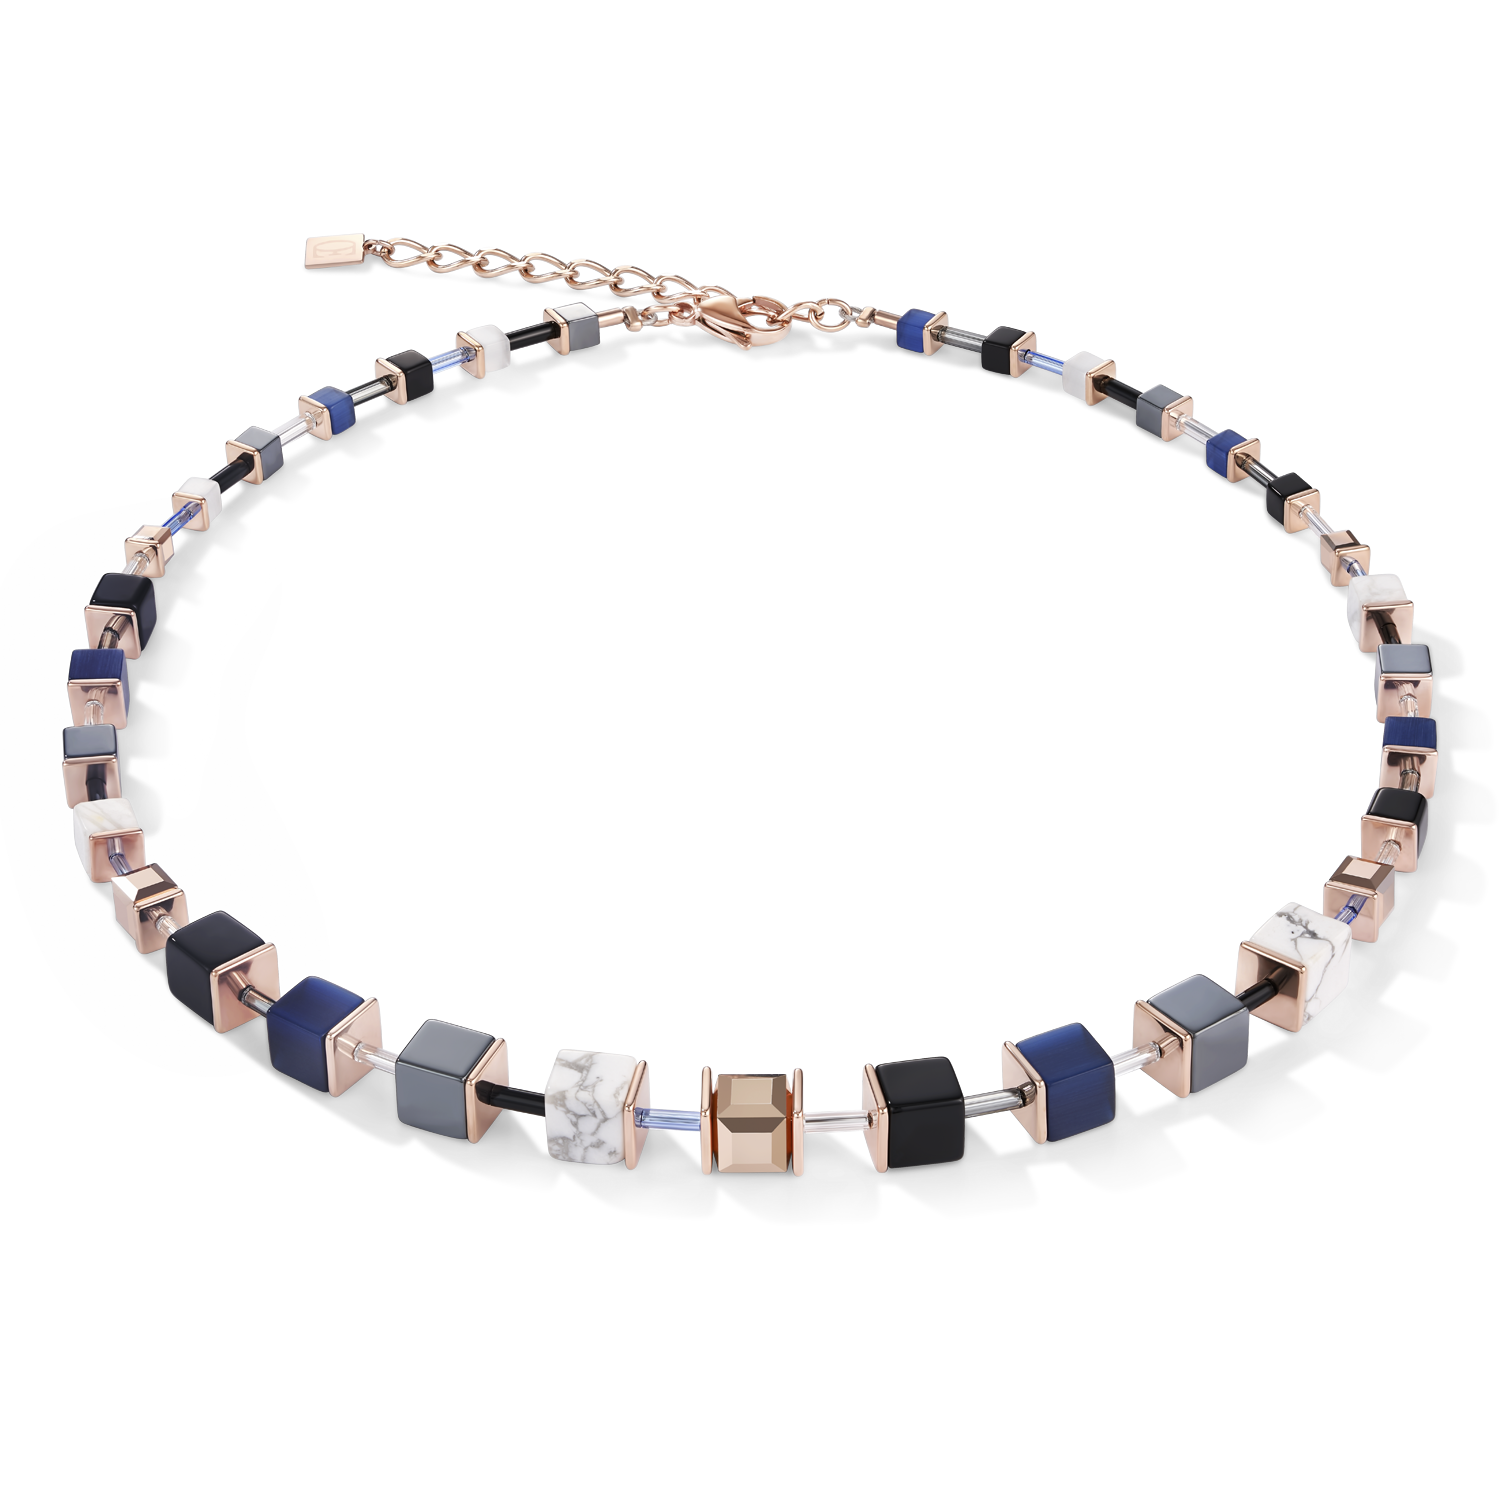 Halskette GeoCUBE® blau-roségold